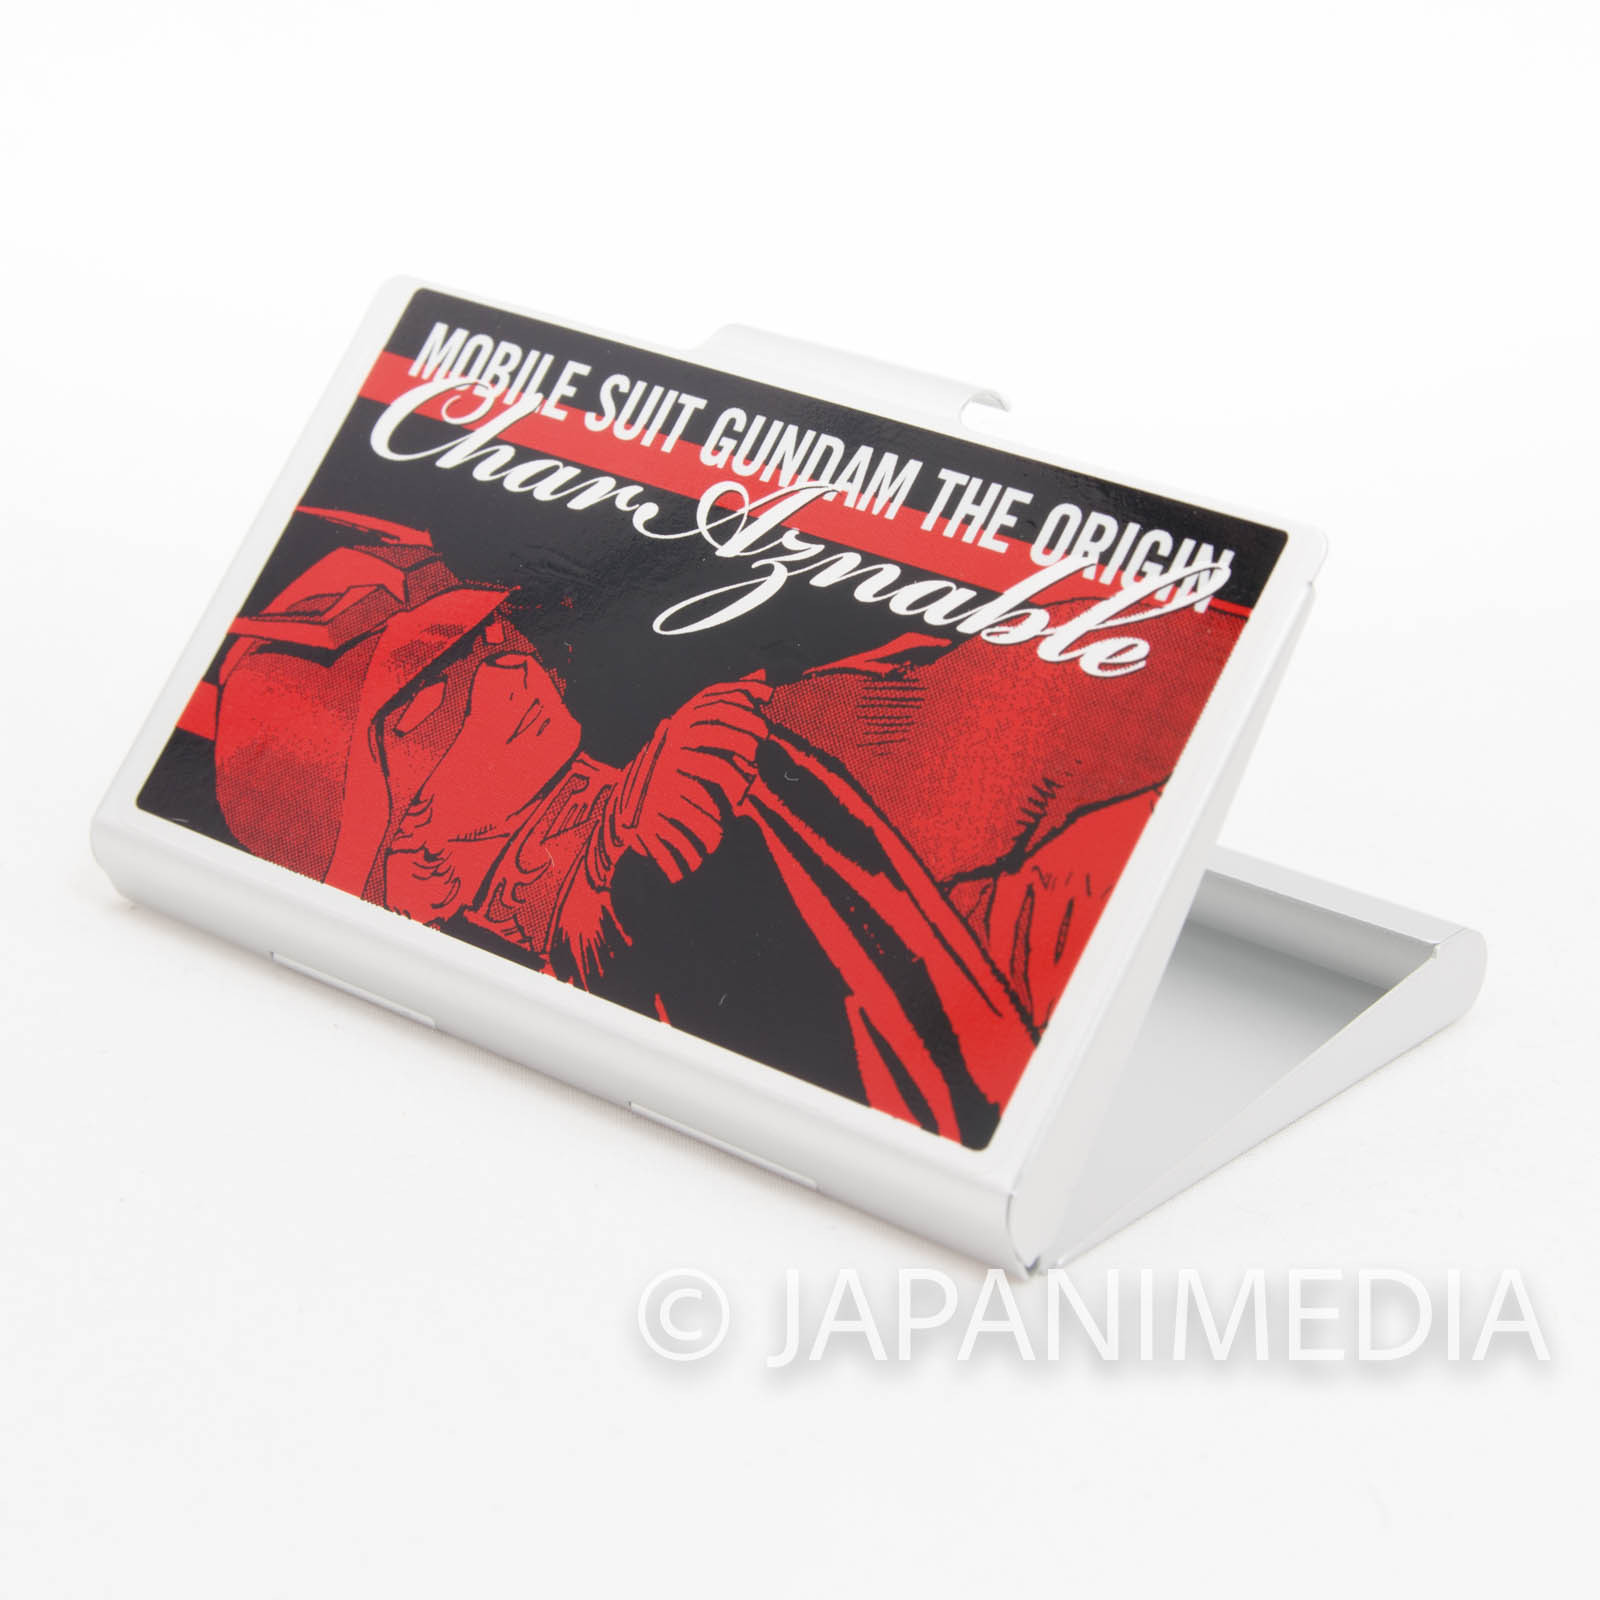 Mobile Suit Gundam The Origin Char Aznable Original Business card case JAPAN ANIME